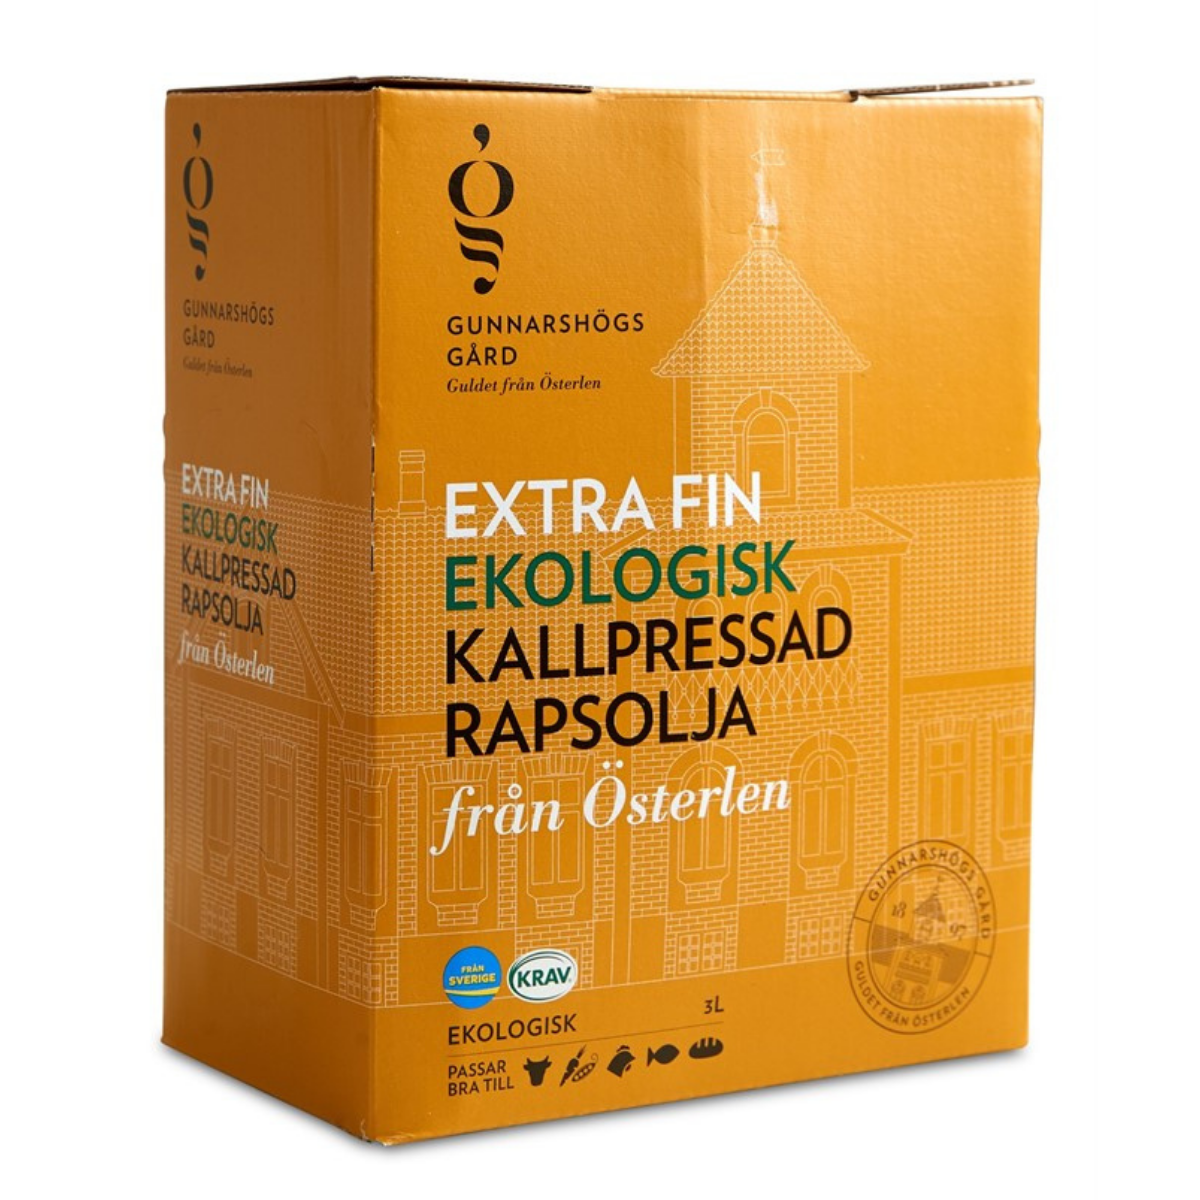 Gunnarshögs Gård's Rapsolja KRAV 3 L bag-in-box'